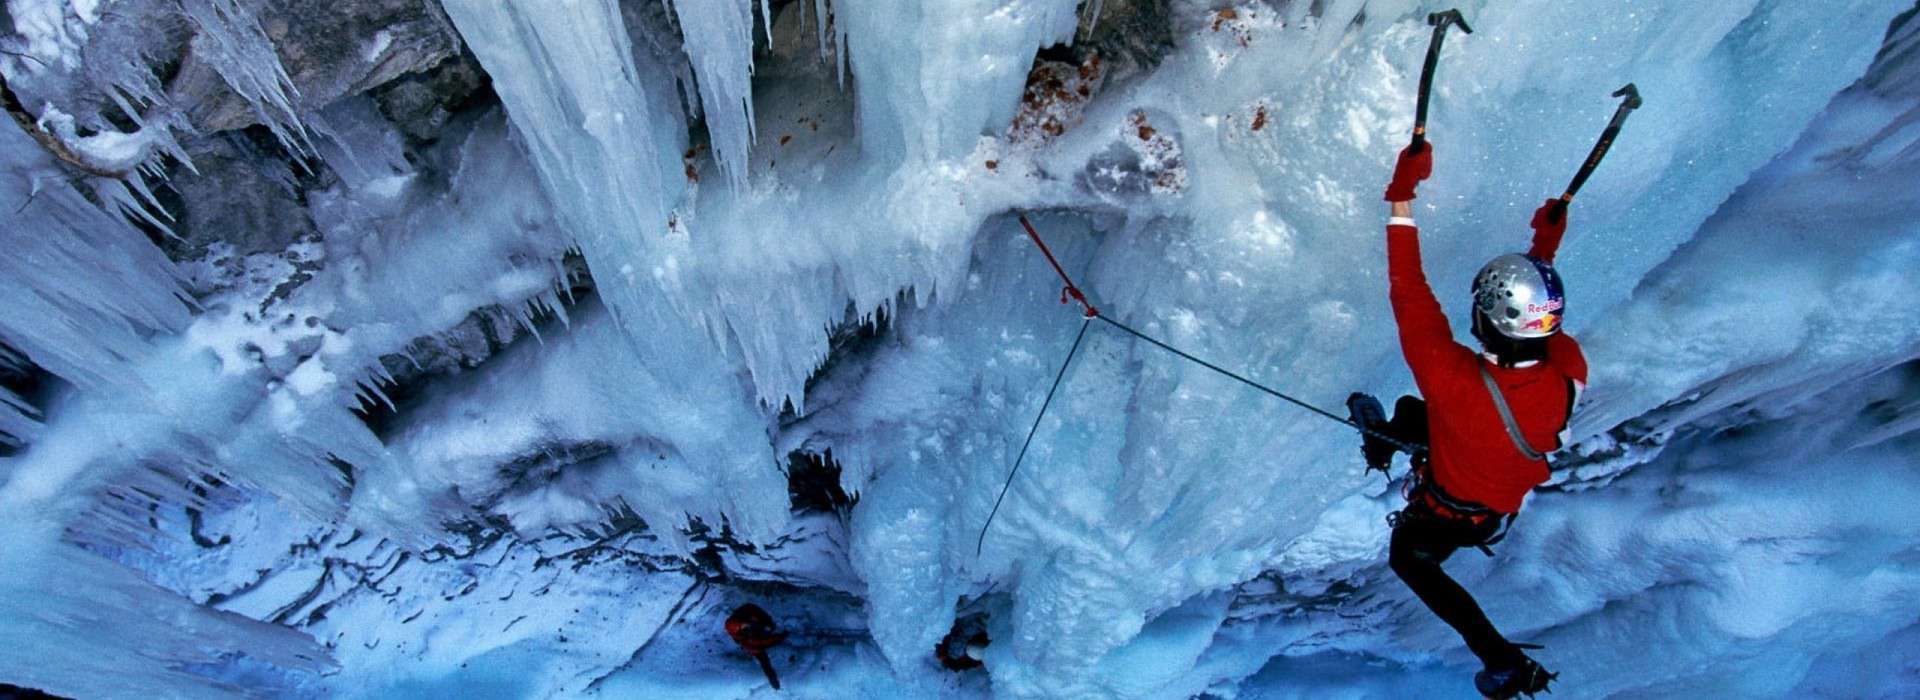 High Resolution Wallpaper | Ice Climbing 1920x700 px